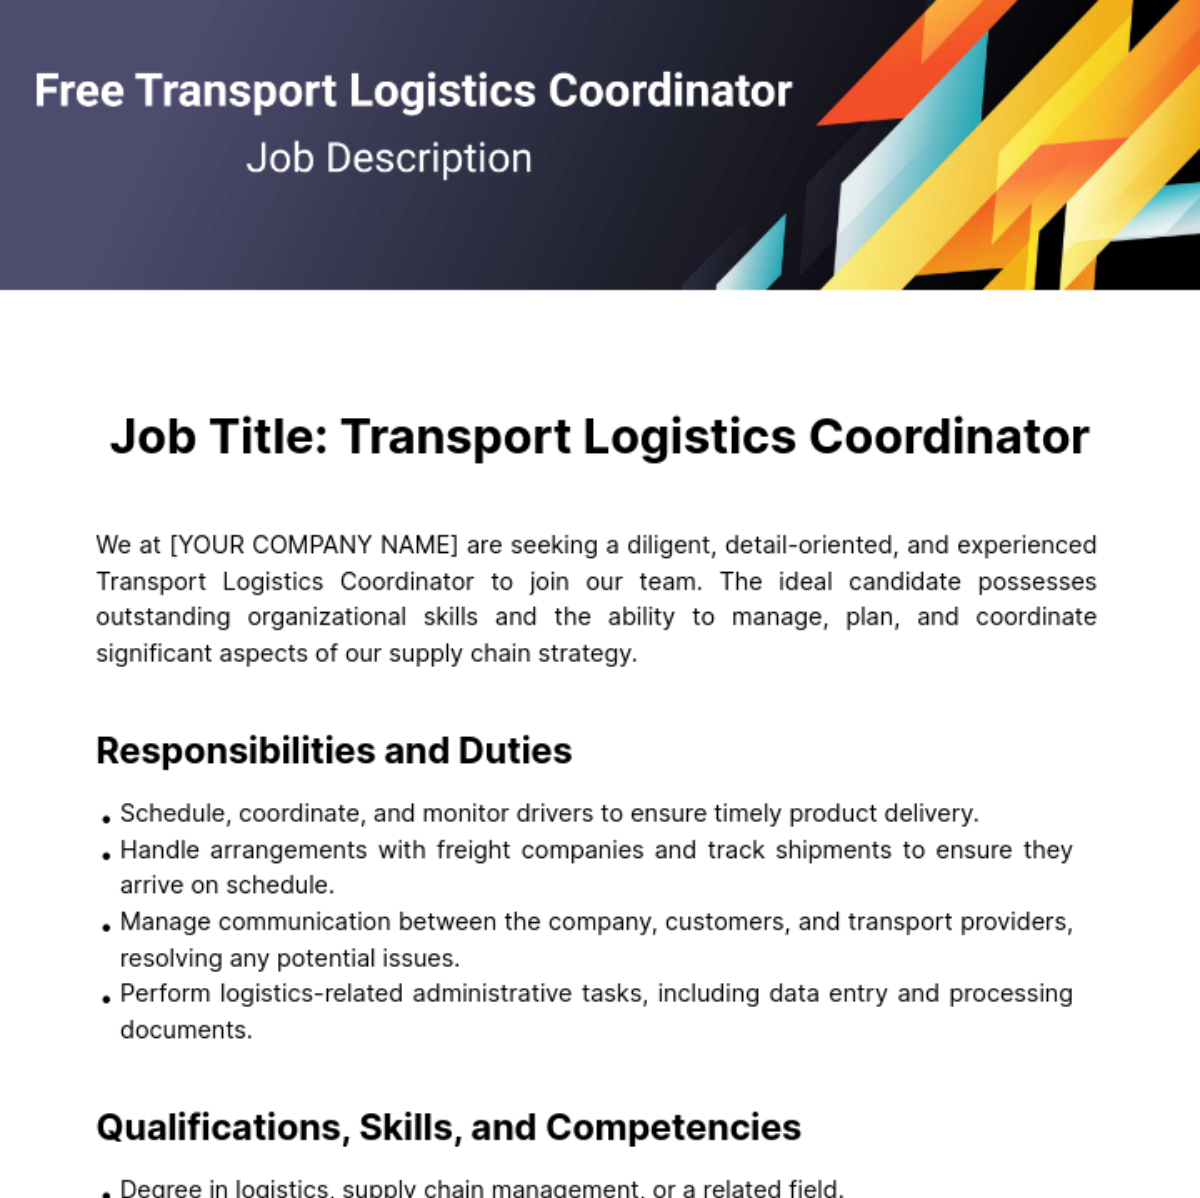 Transport Logistics Coordinator Job Description Template